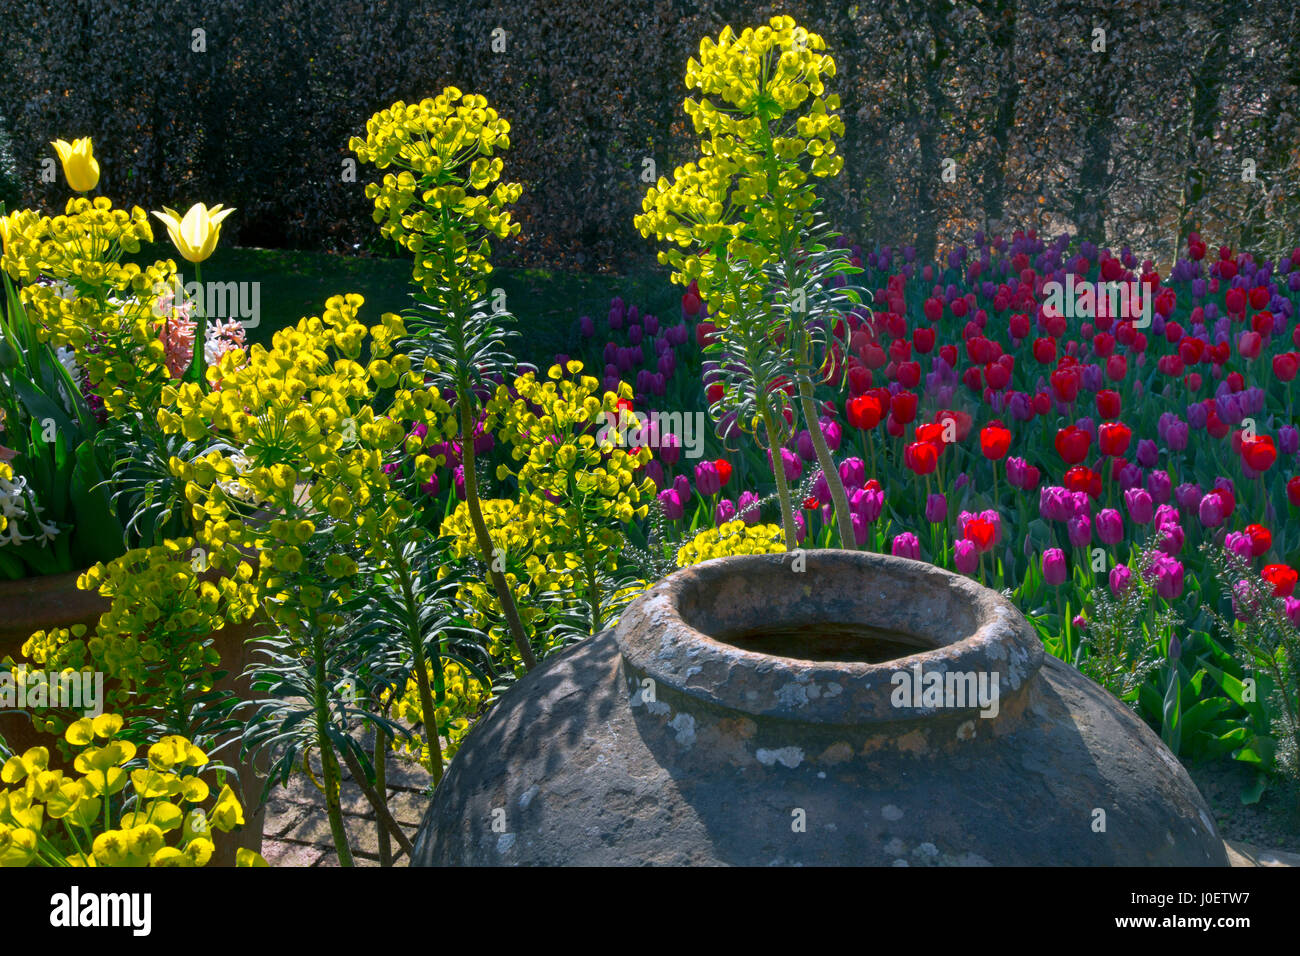 Euphorbia characias subsp. wulfenii spurge in garden with pot Stock Photo